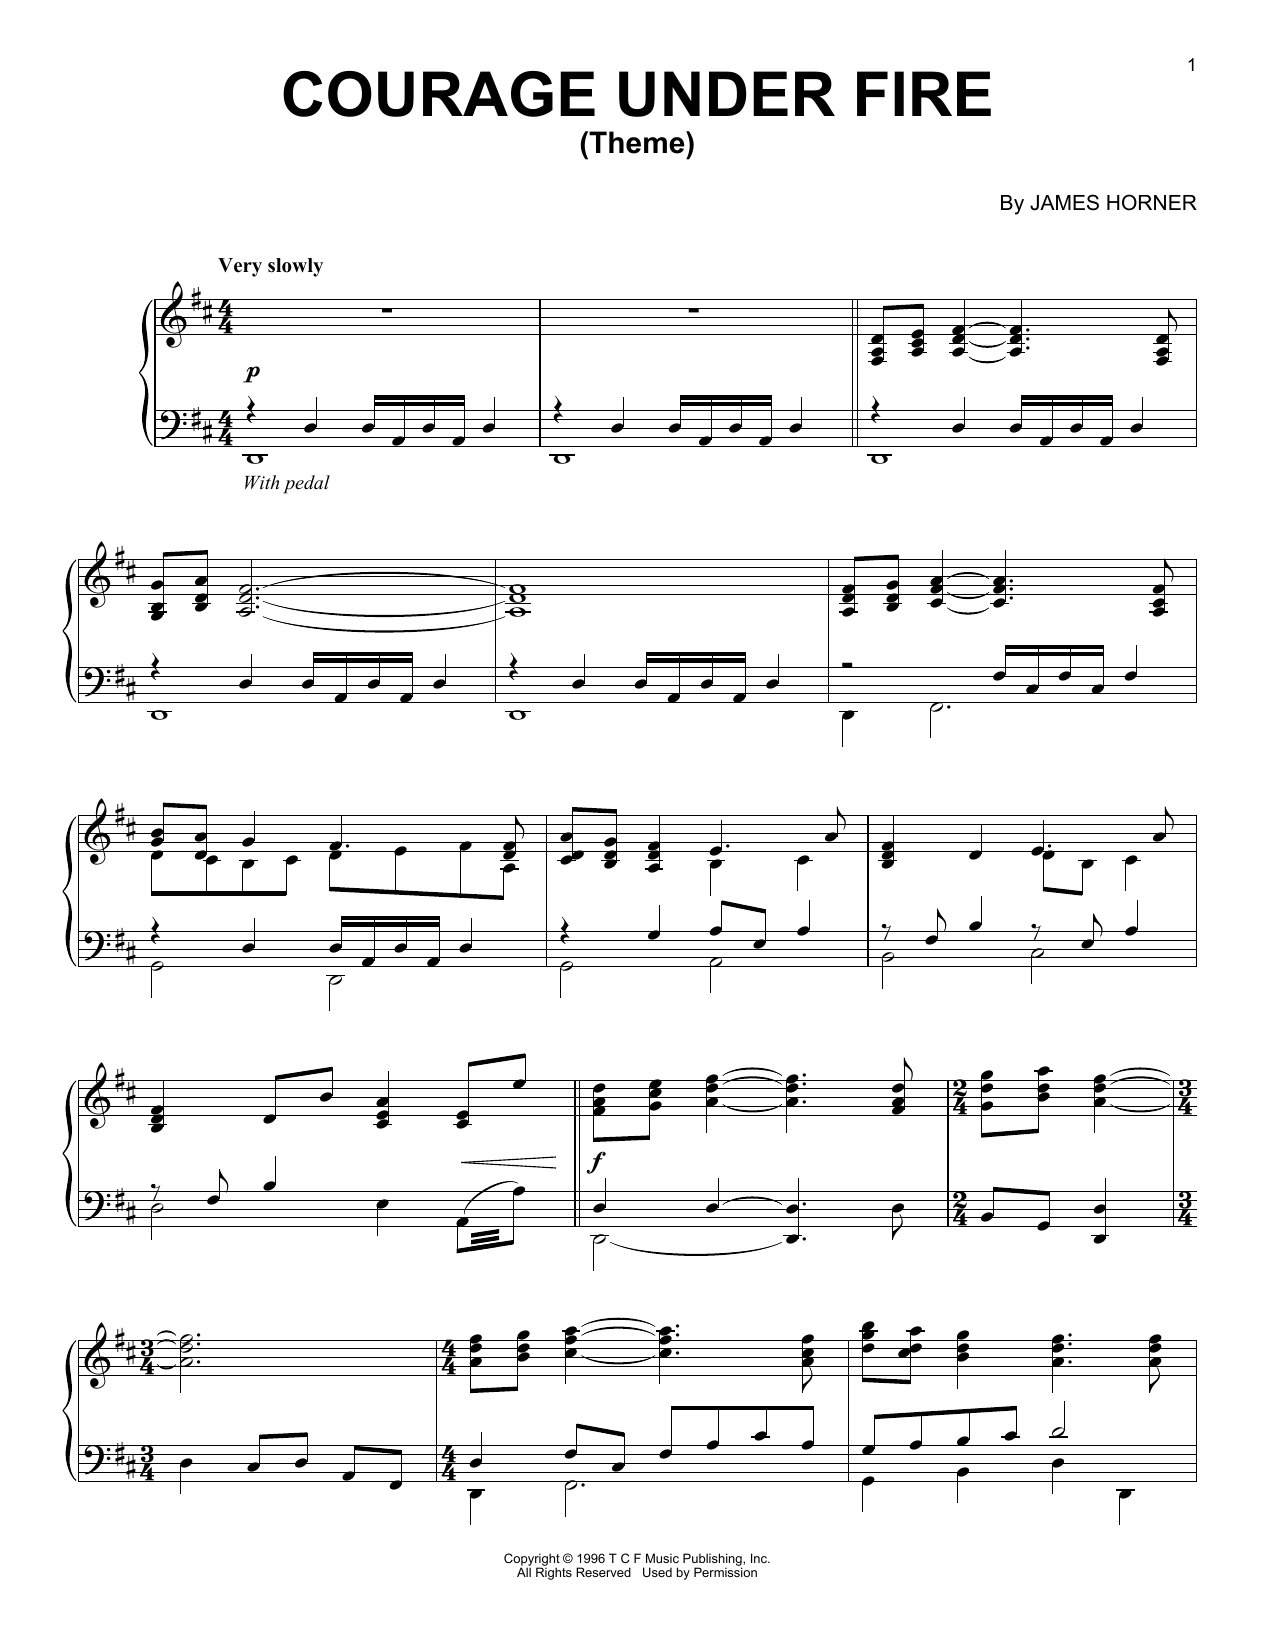 Download James Horner Courage Under Fire (Theme) Sheet Music